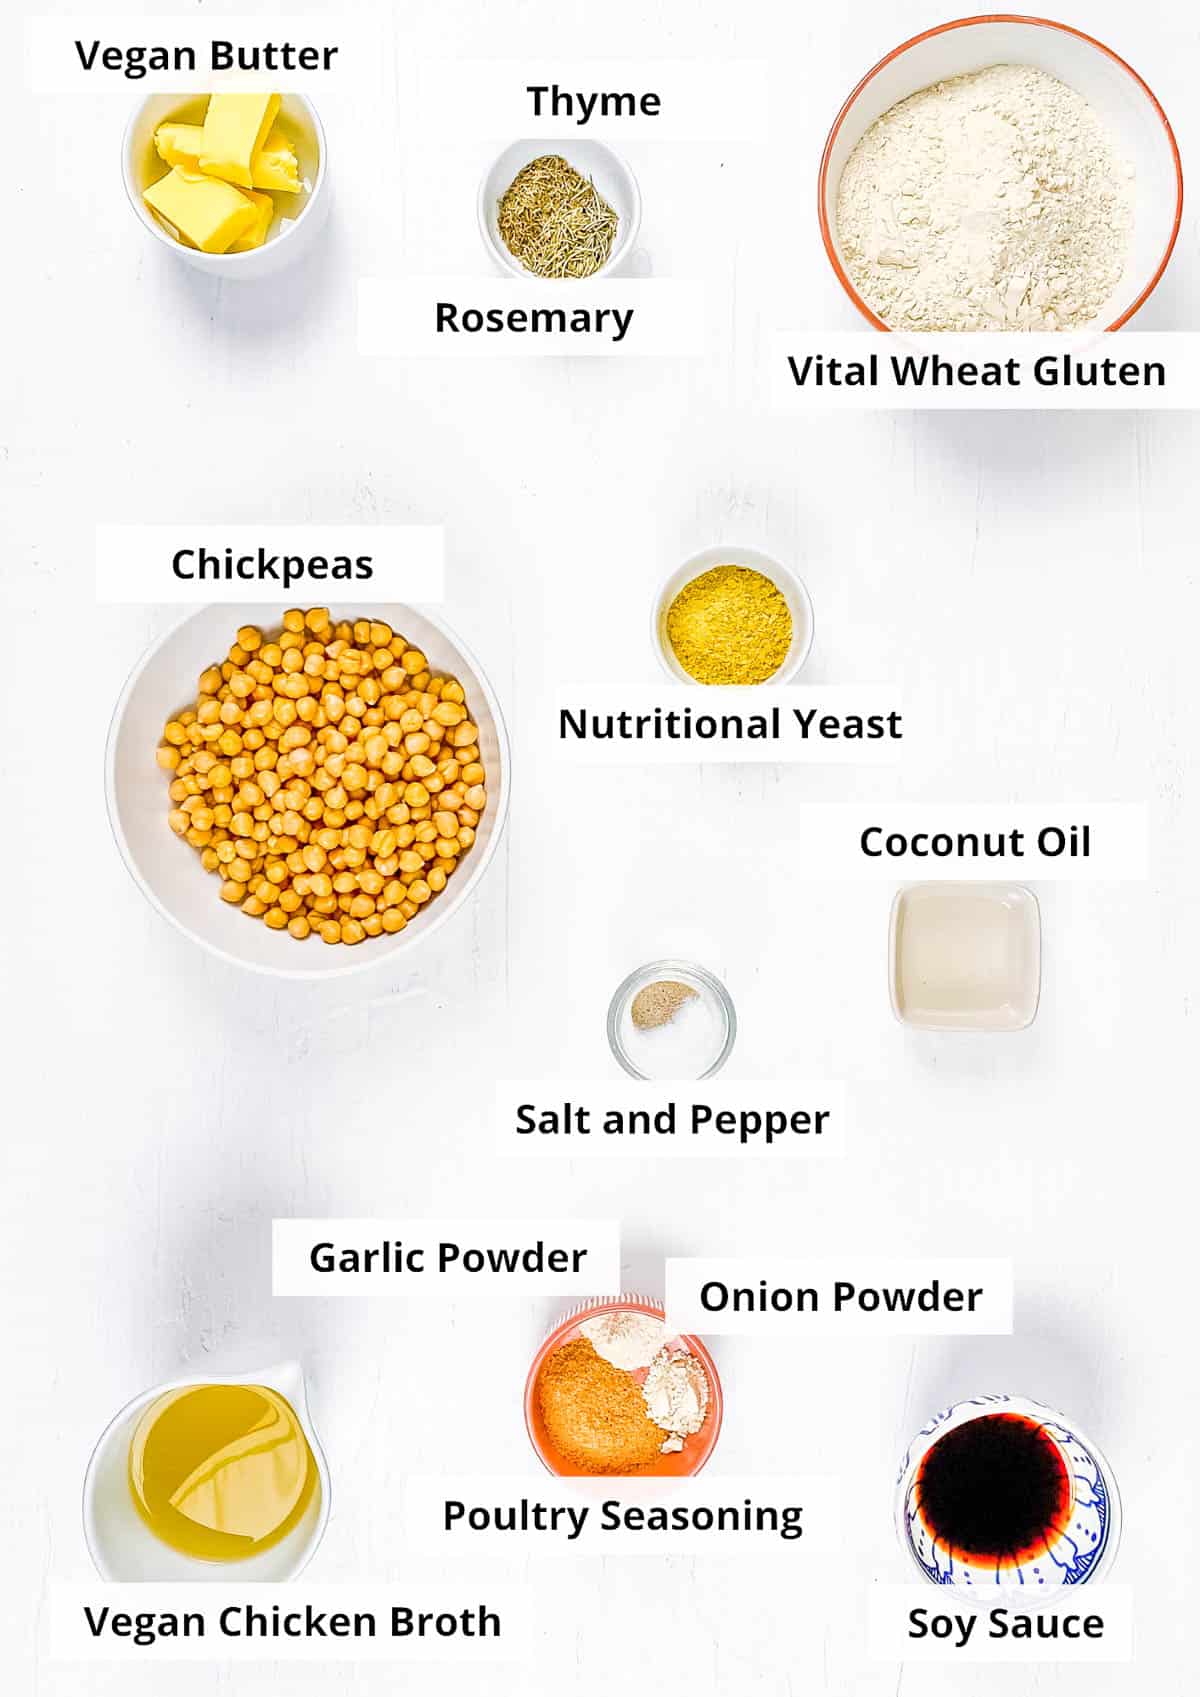 Ingredients for vegan turkey recipe on a white background.